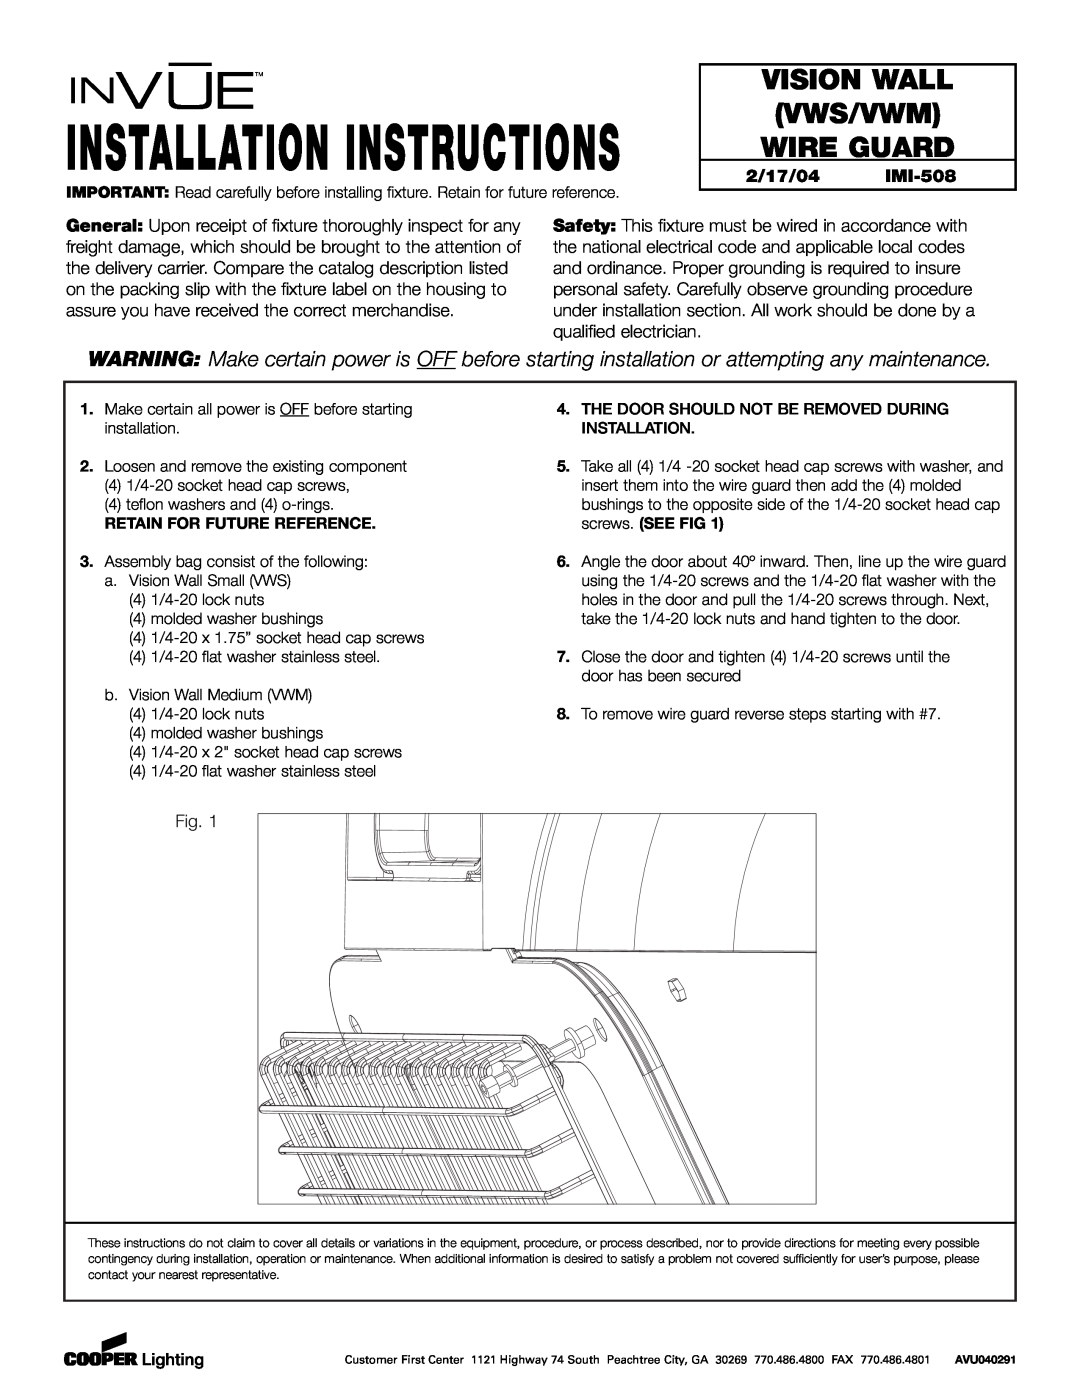 Cooper Lighting IMI-508 installation instructions Installation Instructions, Vision Wall Vws/Vwm Wire Guard 